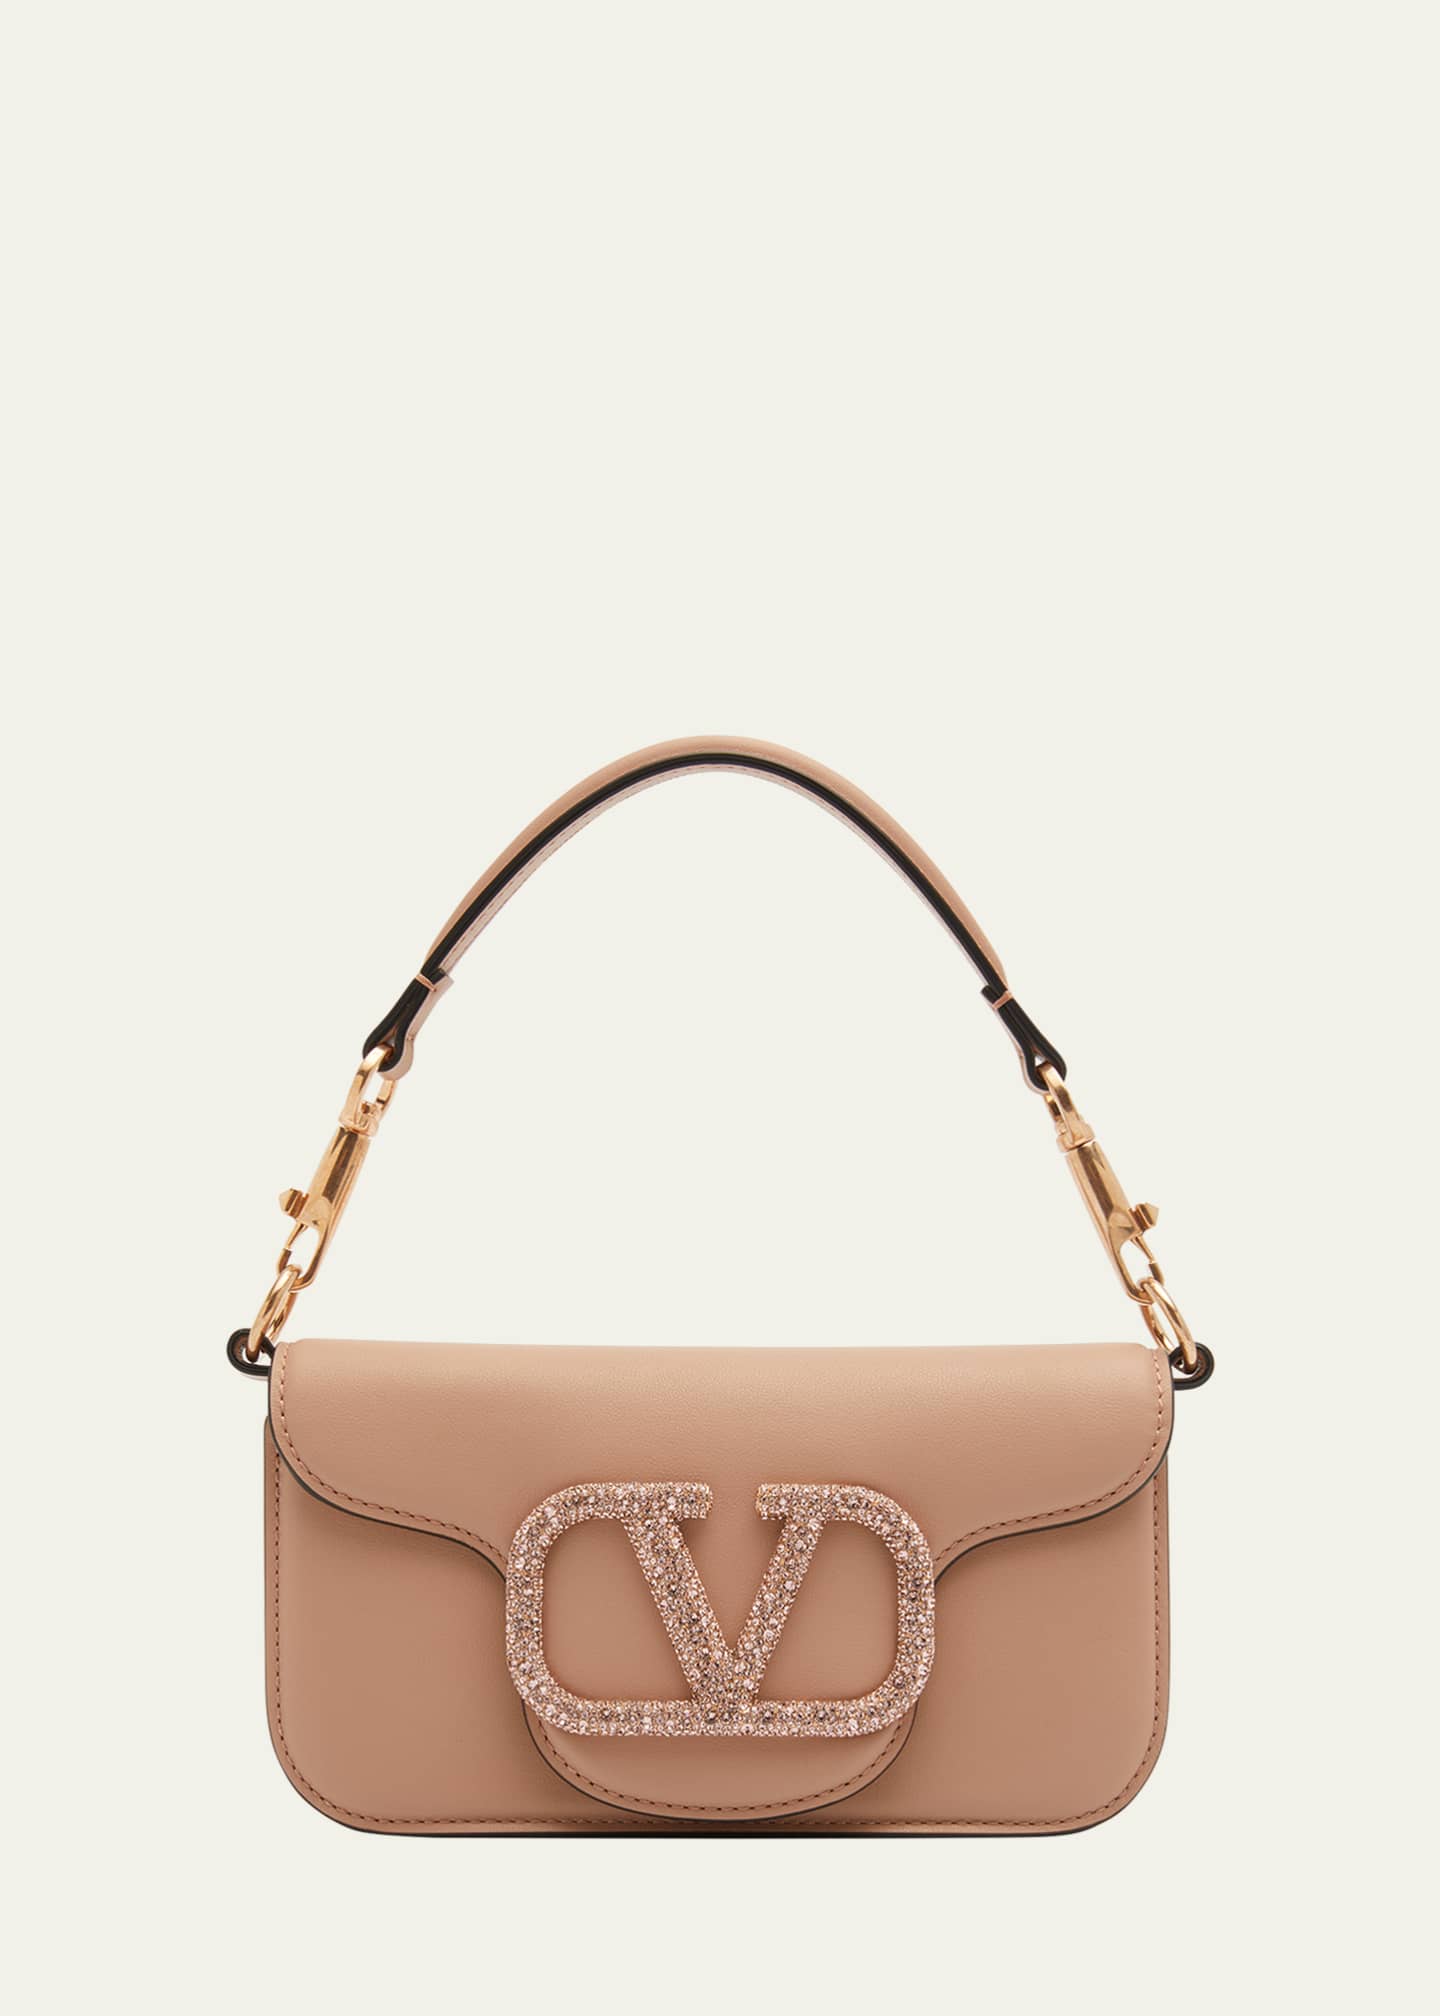 Valentino Garavani Women's Locò Small Shoulder Bag with Jewel Logo - Poudre